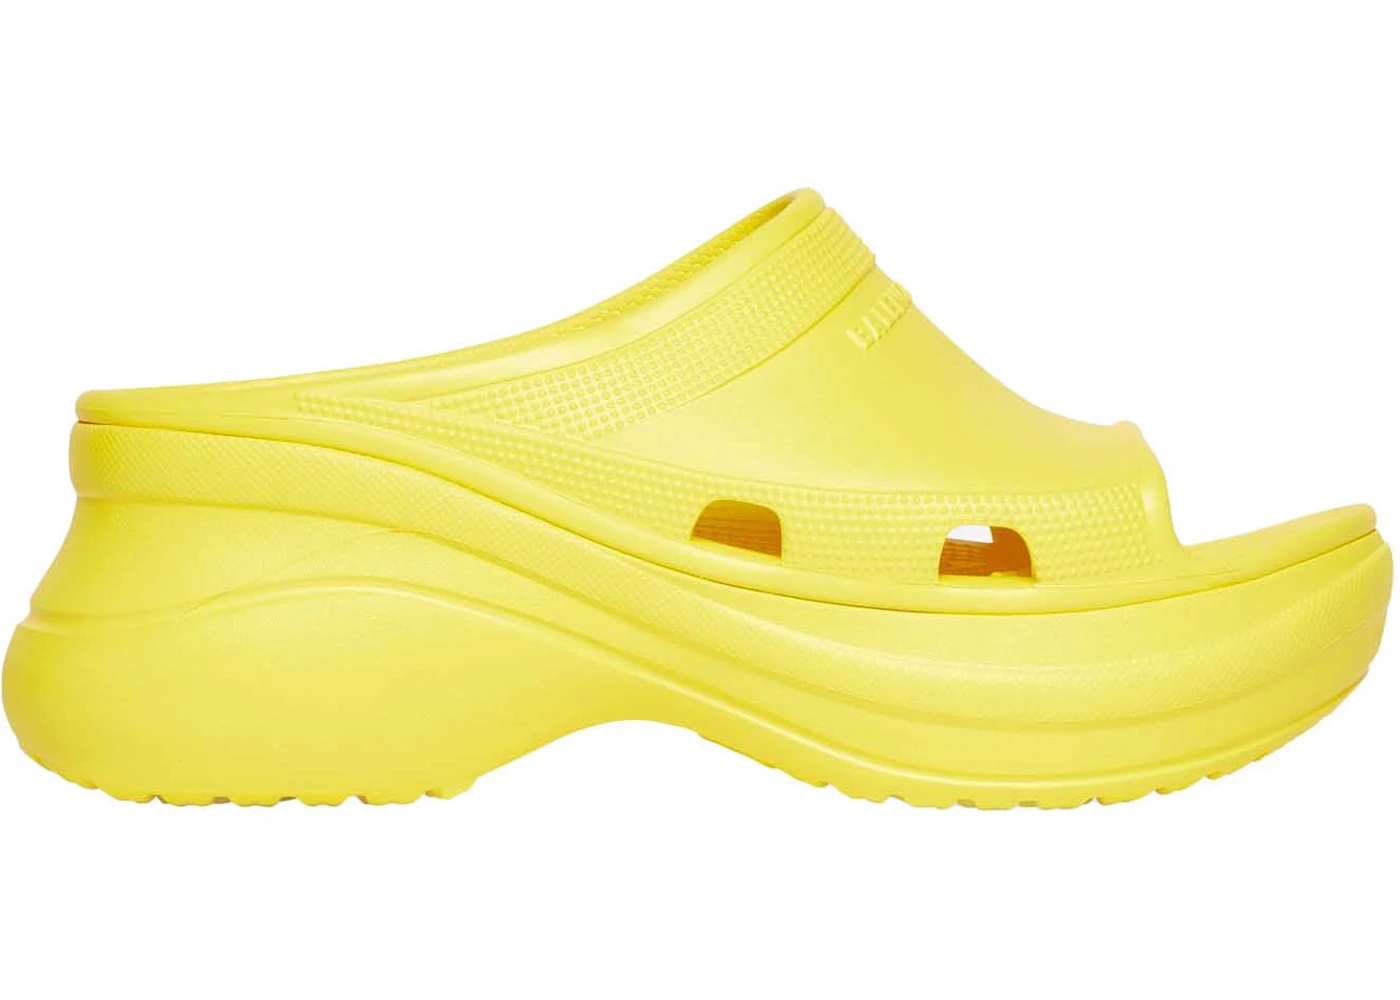 Balenciaga x Crocs Pool Slide Sandals Yellow (Women's) - 677389W1S8E7000 -  US